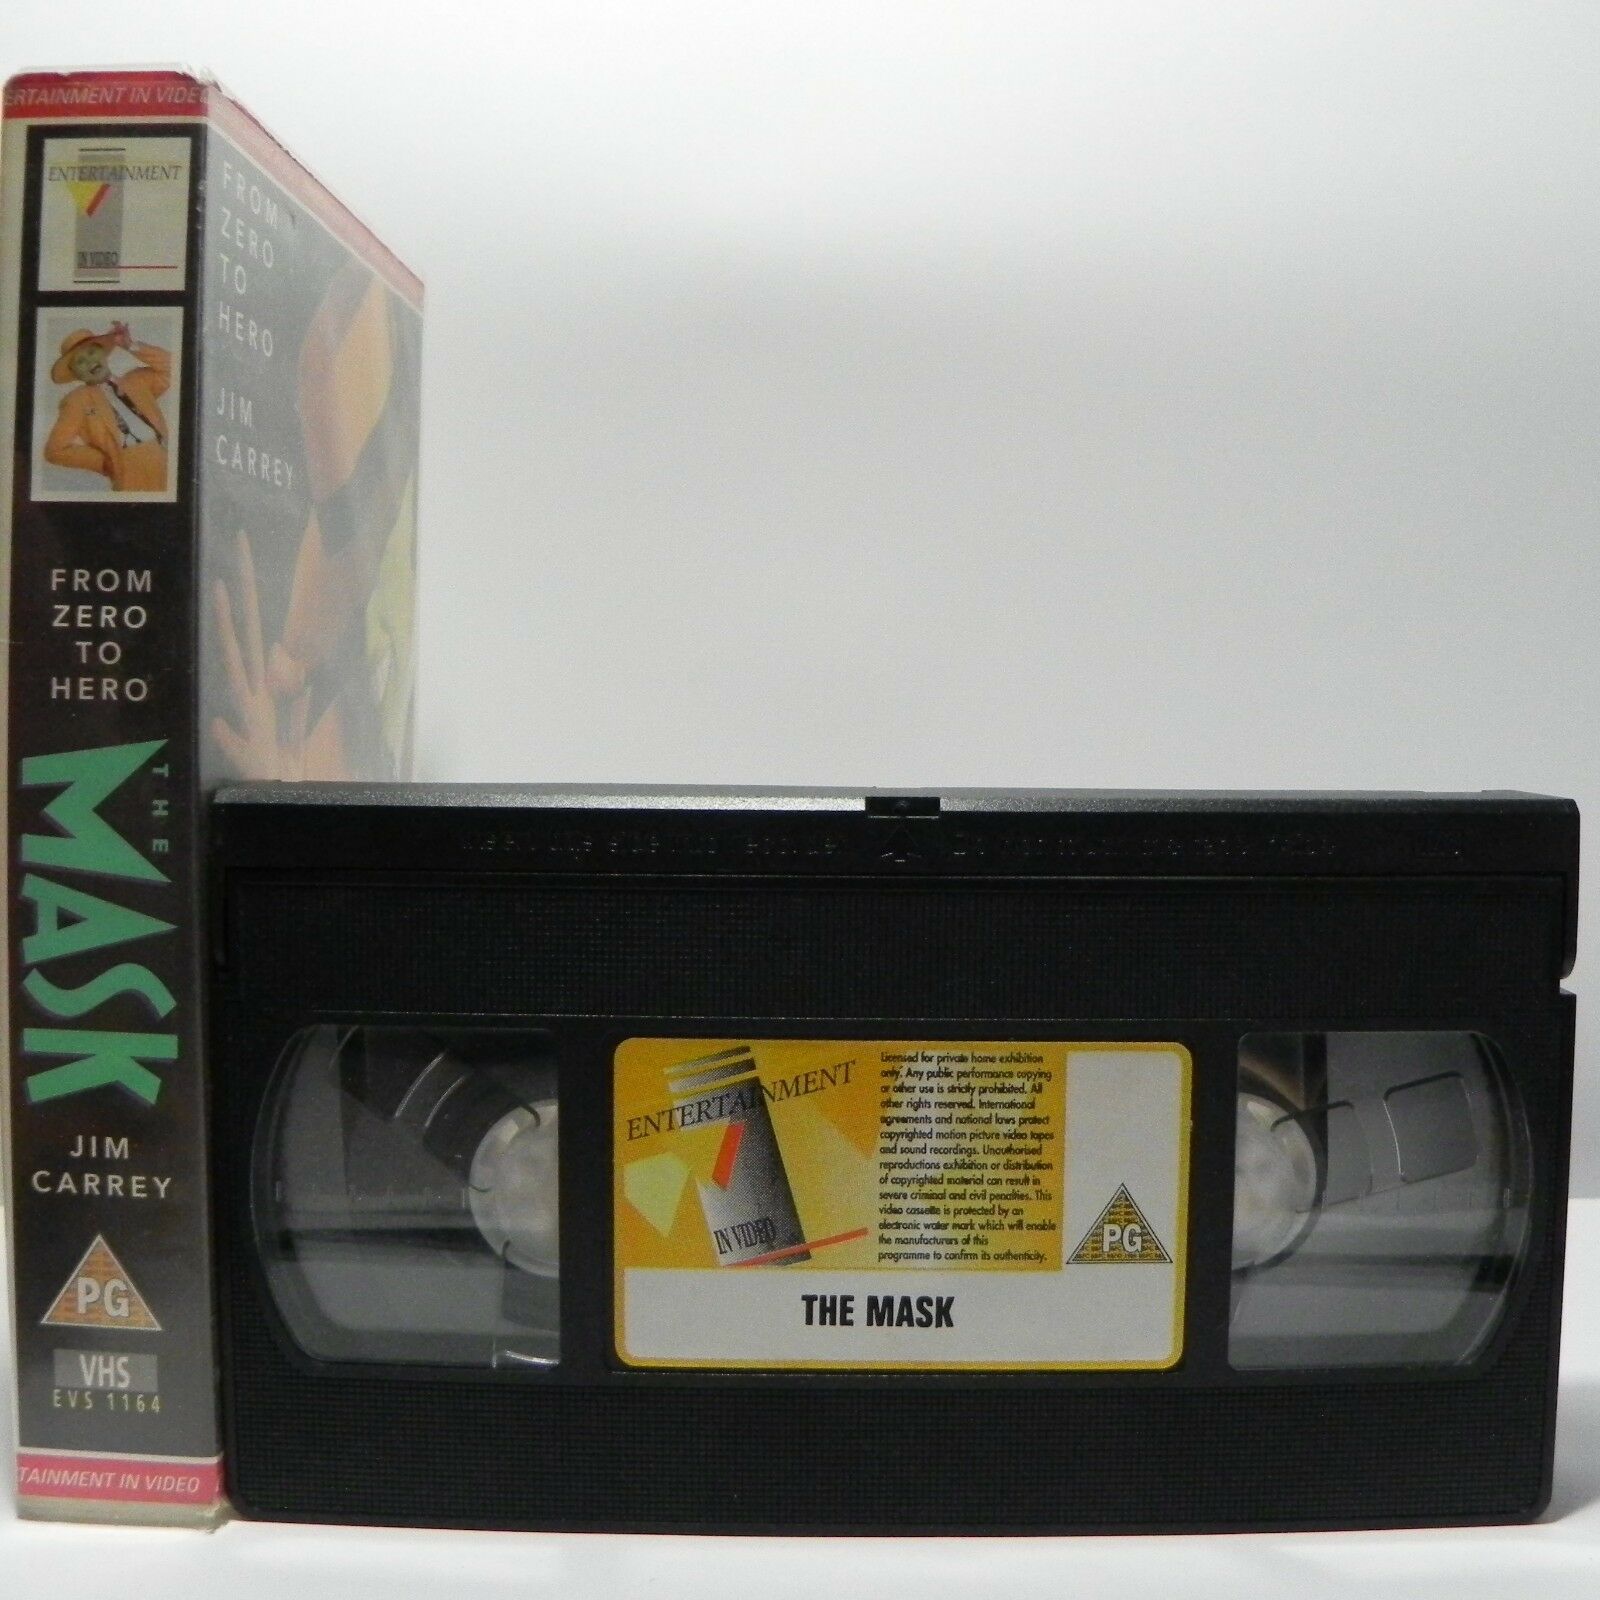 The Mask: Smokin' Comedy - Classic - From Zero To Hero - J.Carrey/C.Diaz - VHS-